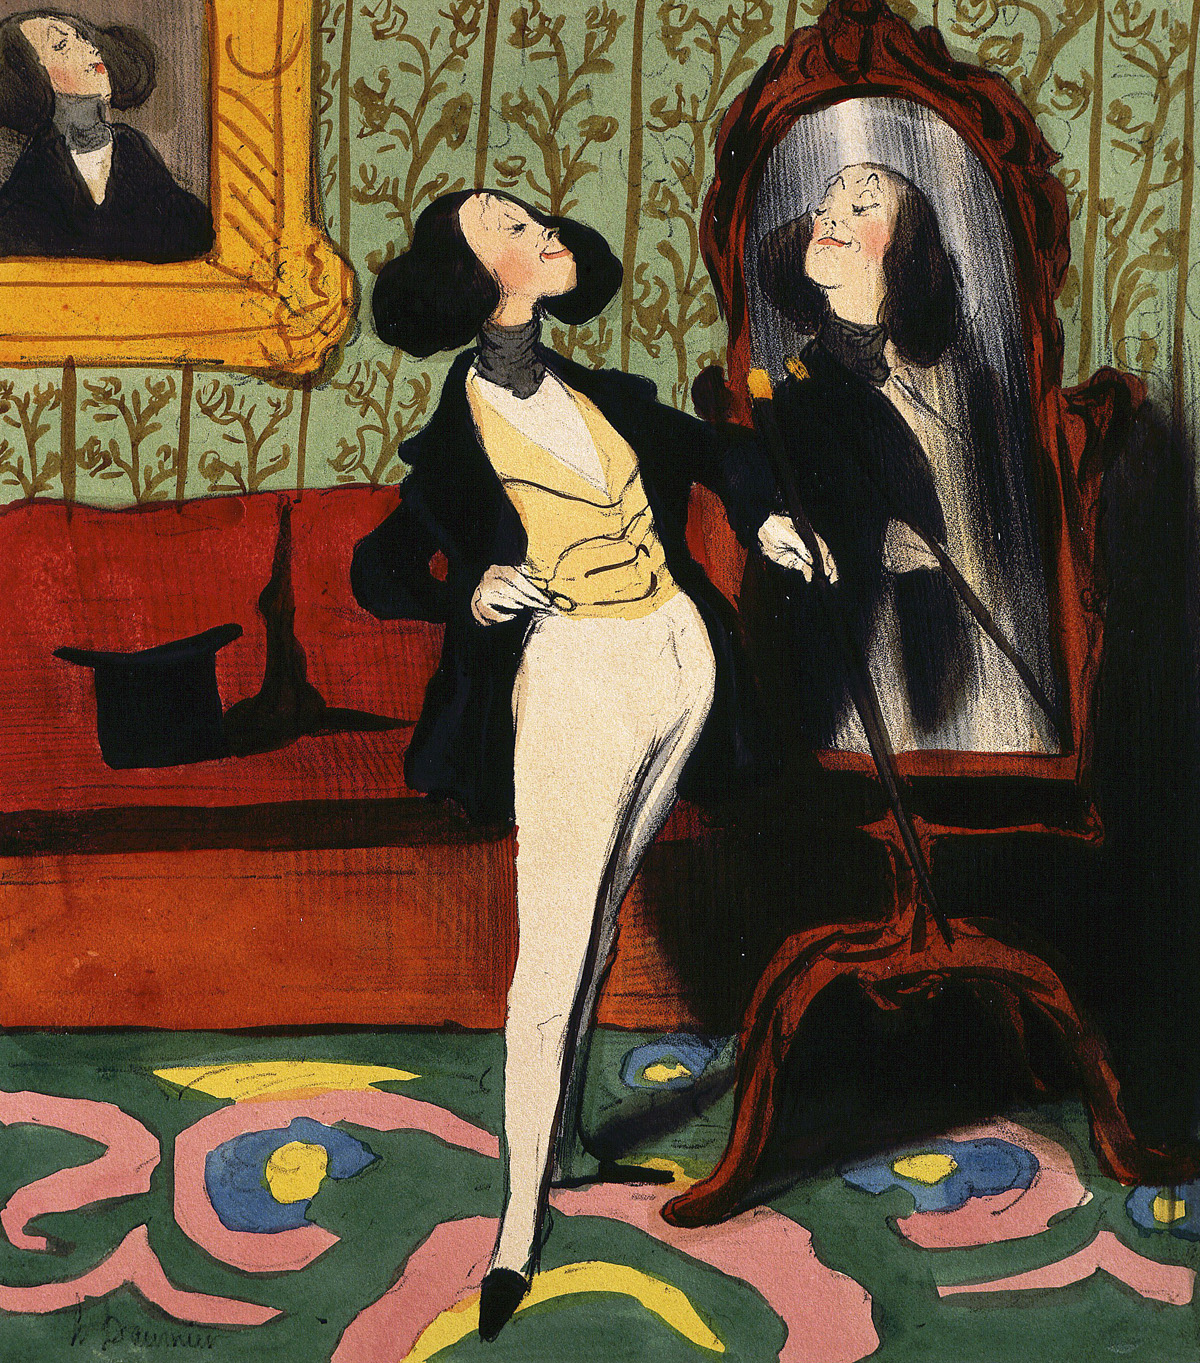 The Narcissist, by Honoré Daumier, c. 1840.